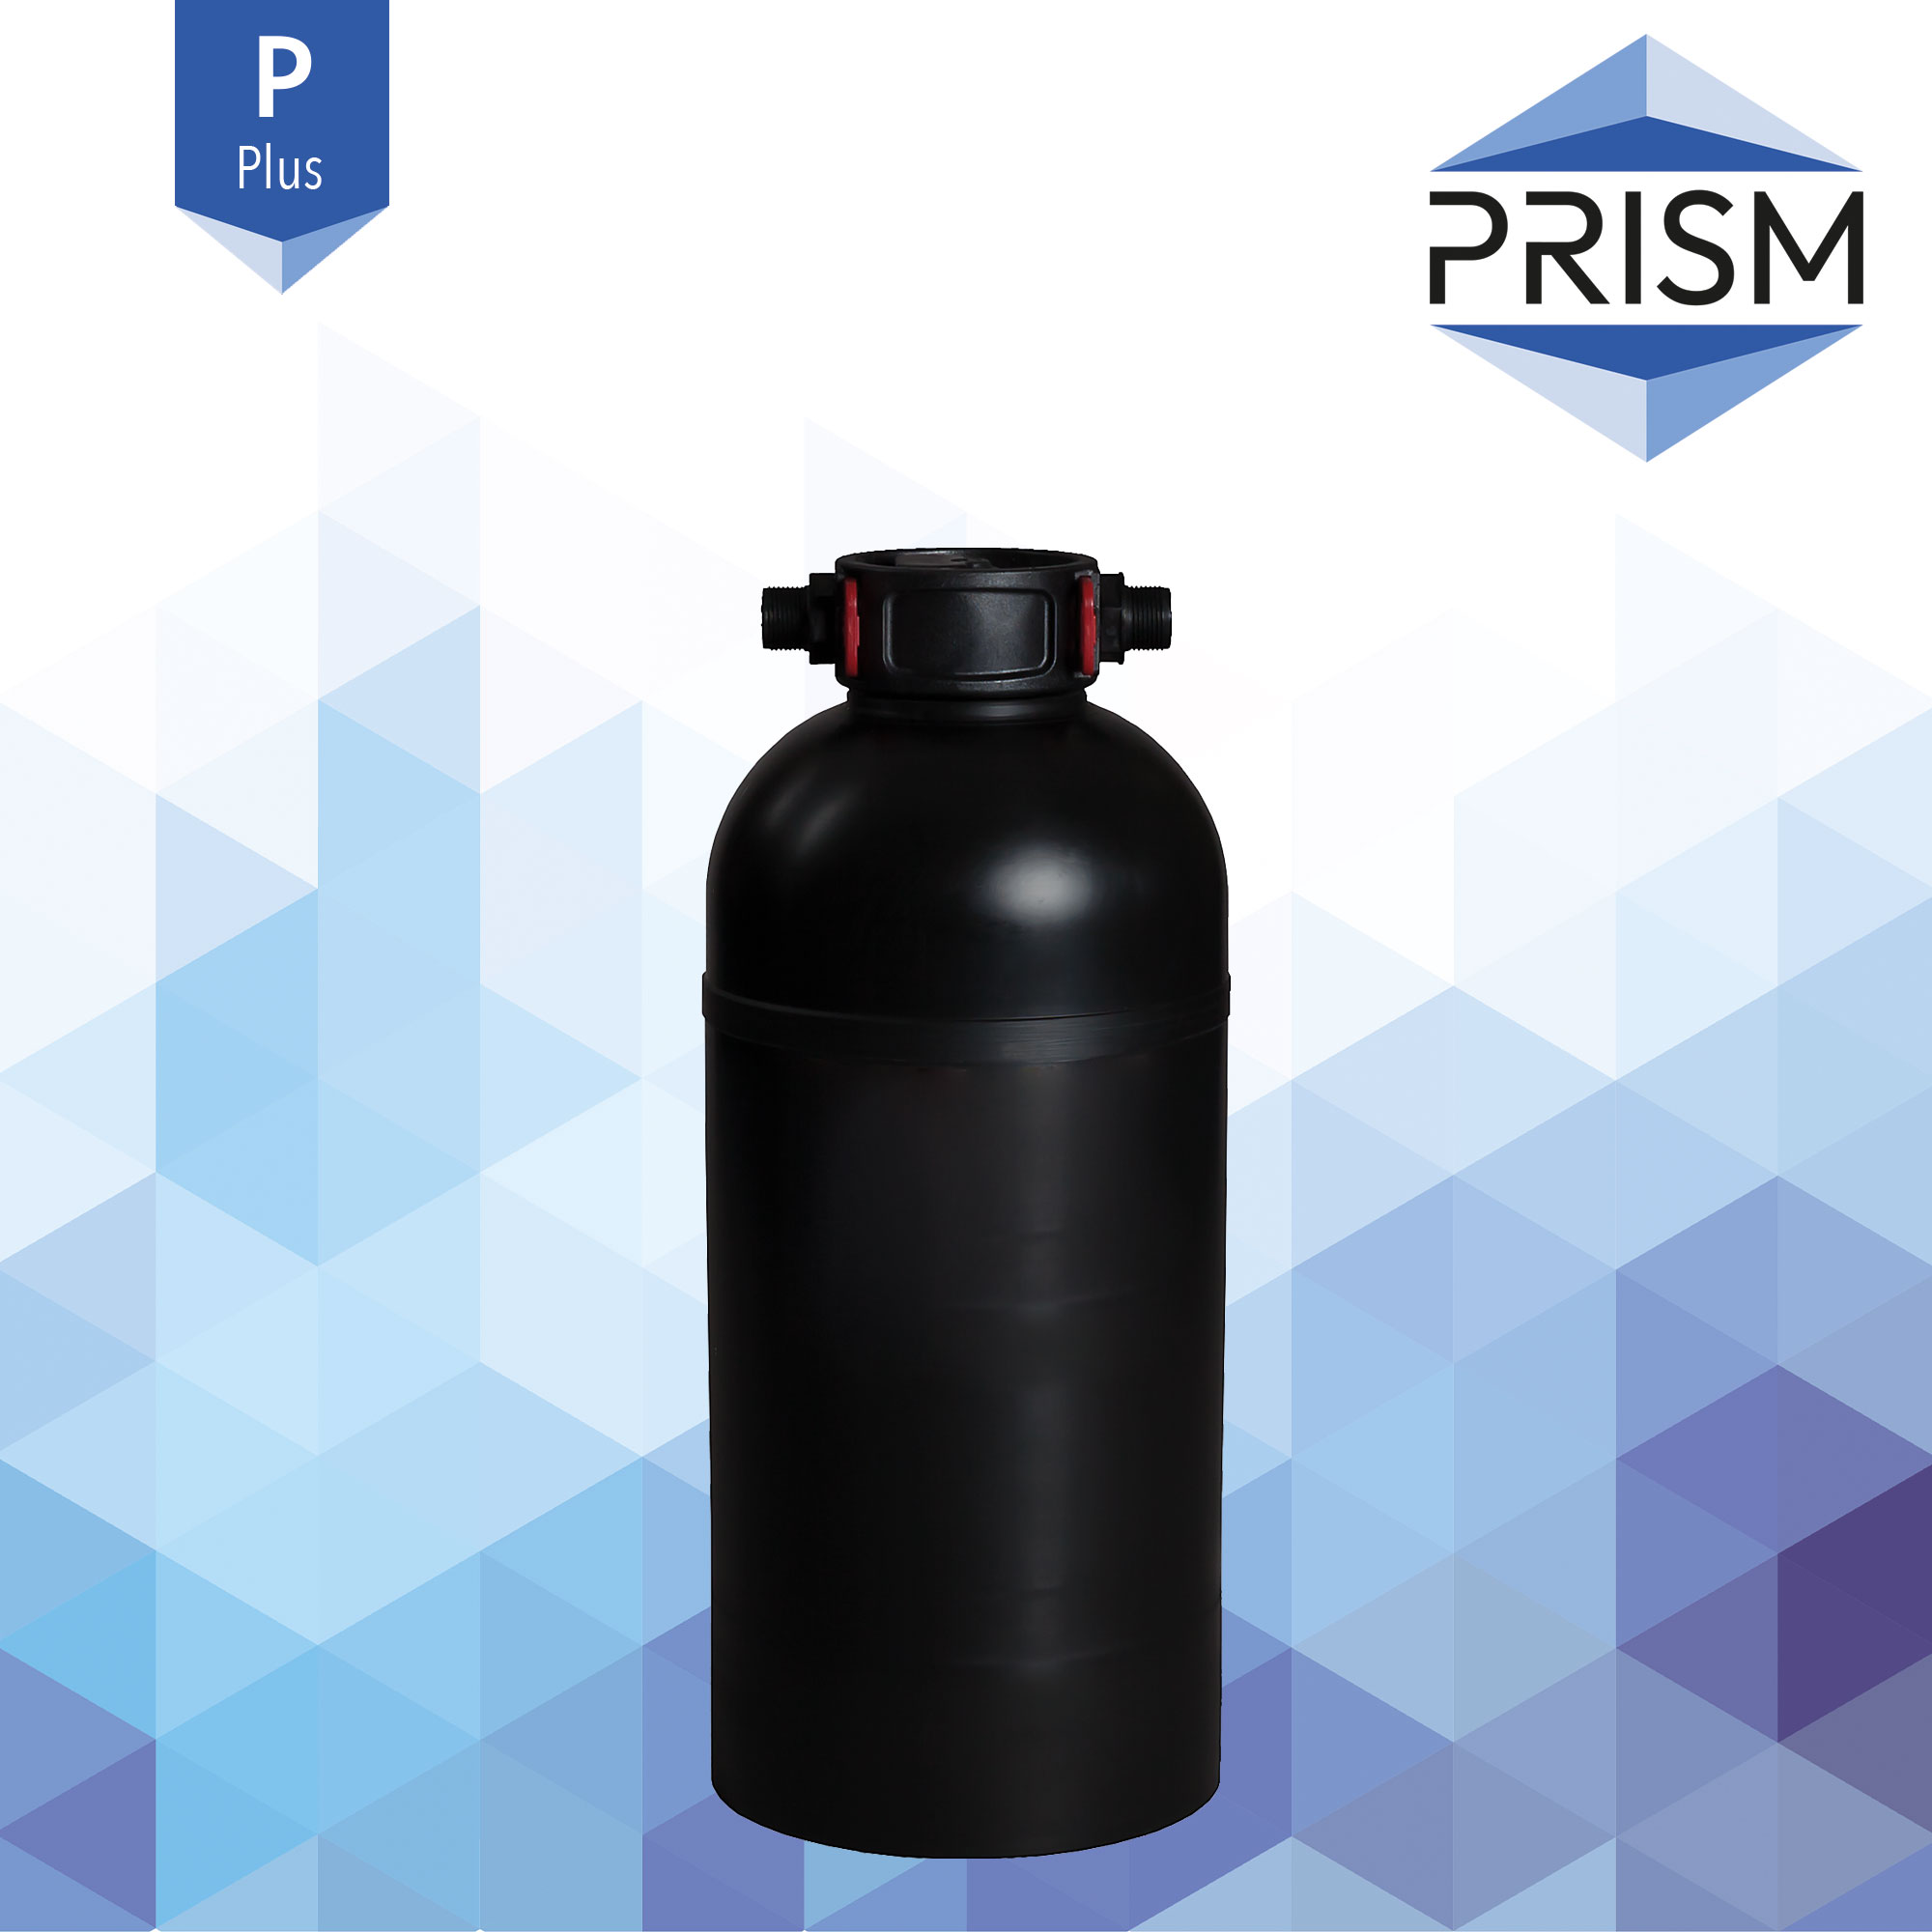 PV-PP-8x35-3/4-P    PRISM PLUS RANGE :  High Yield Polypropylene Pressure Vessel 8